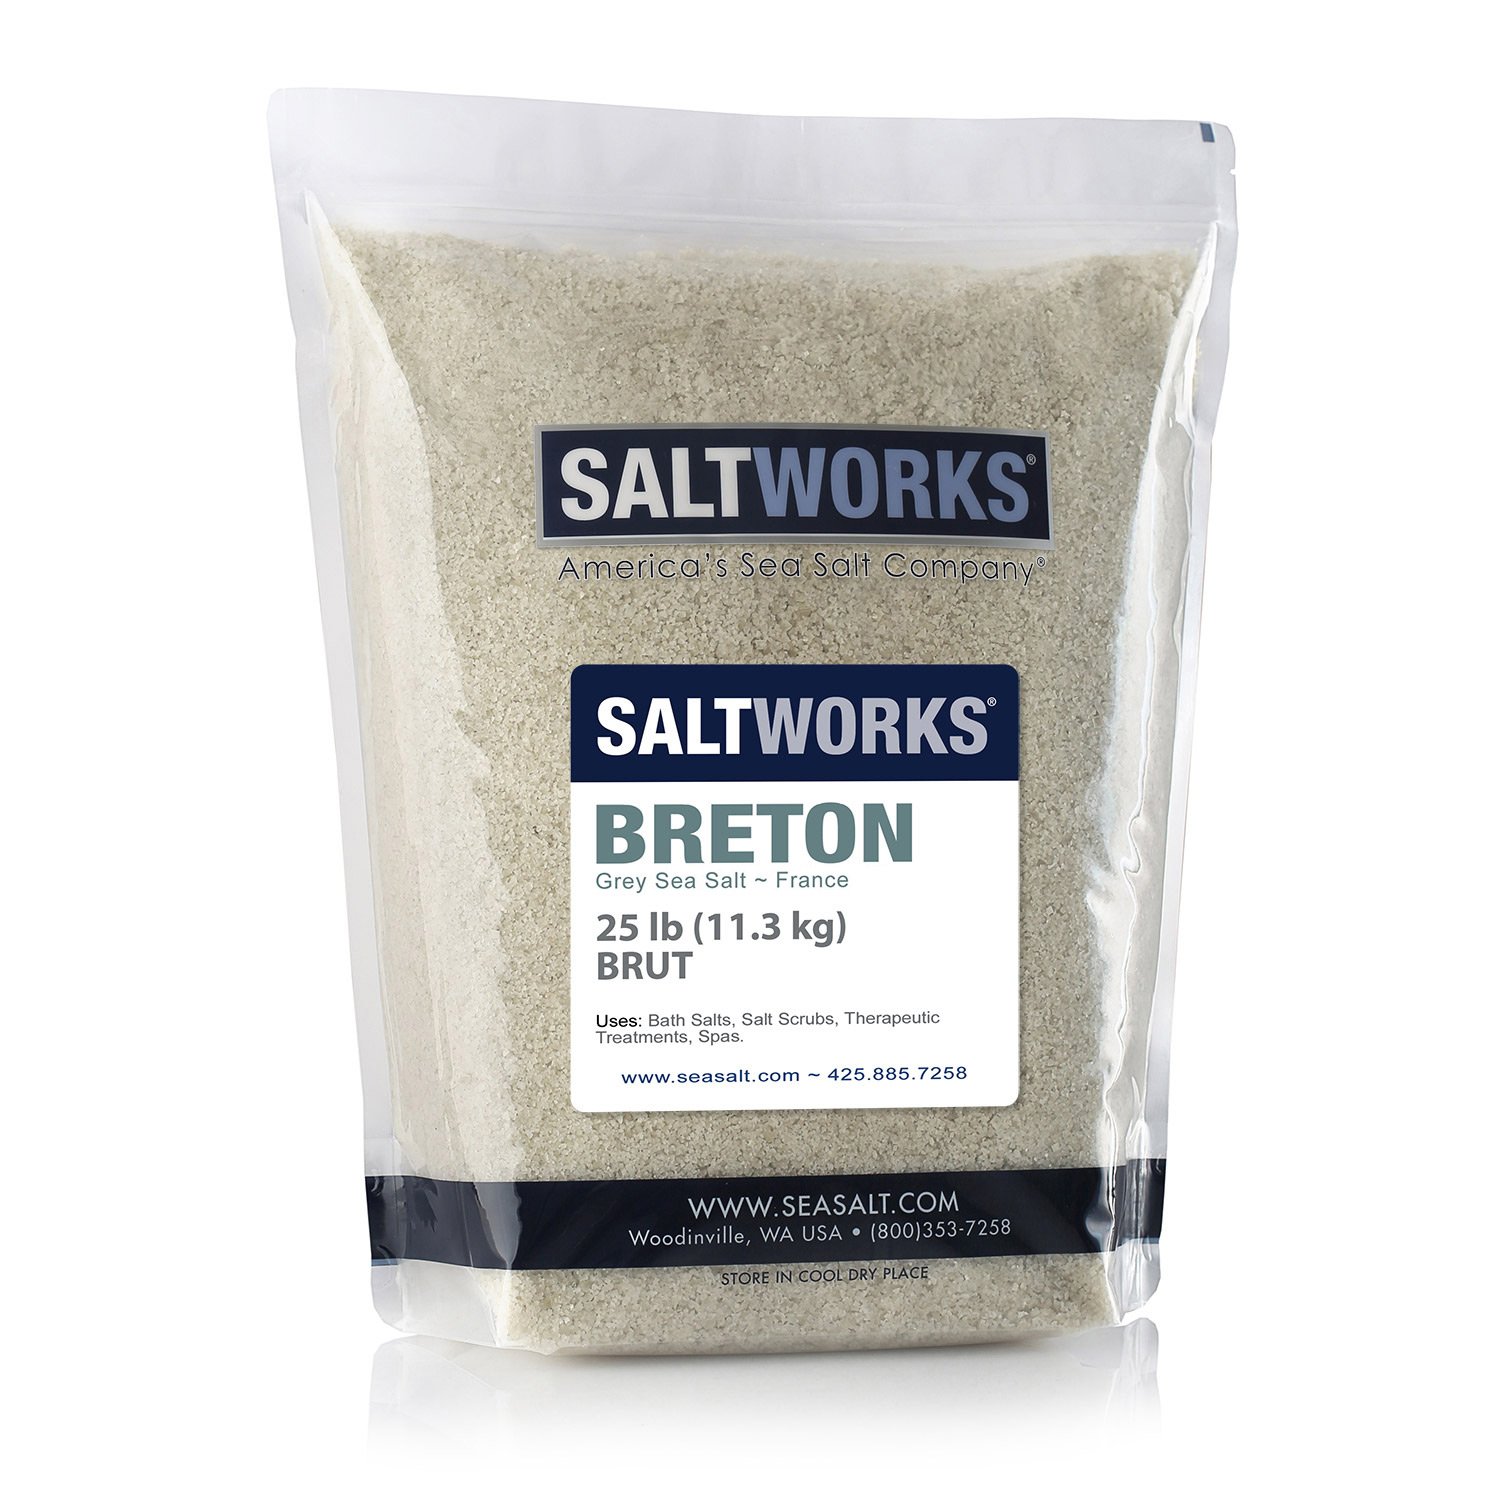 MORTON® SALT SUBSTITUTE - Morton Salt